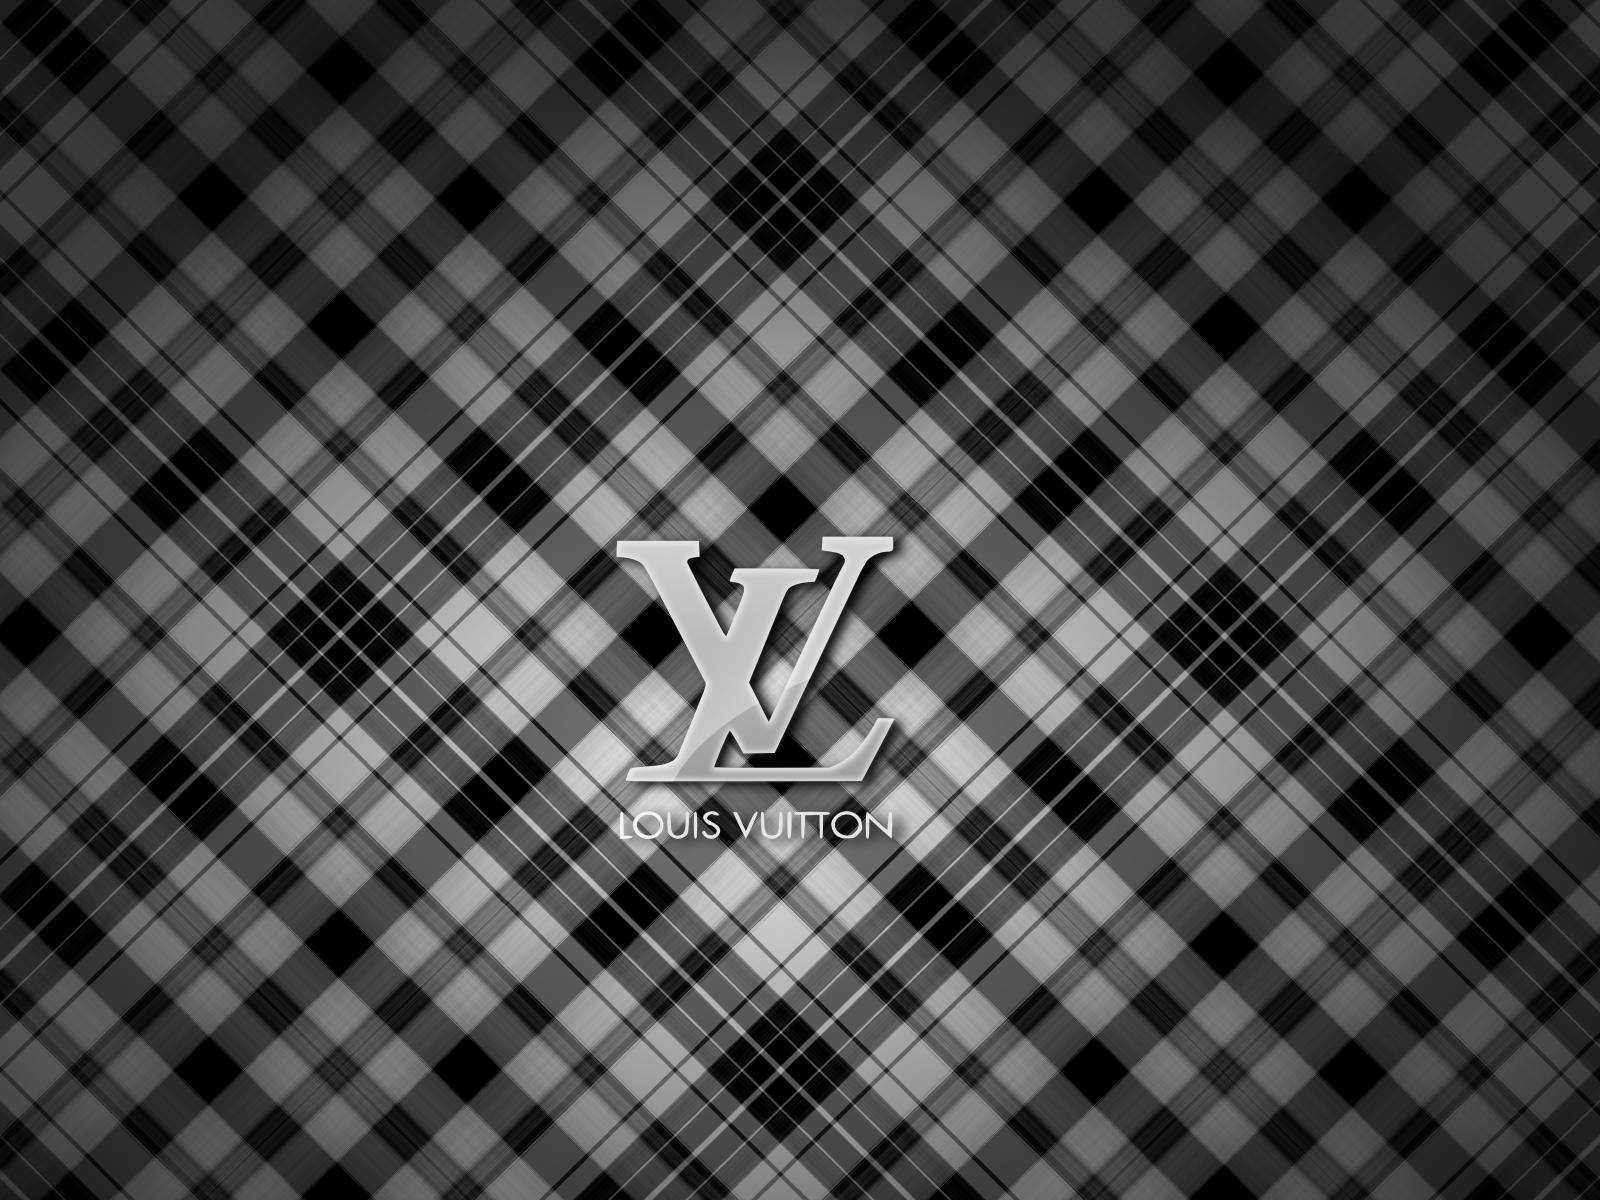  Louis Vuitton Taille Elle Wallpaper 1600x1200 Full HD Wallpapers 1600x1200